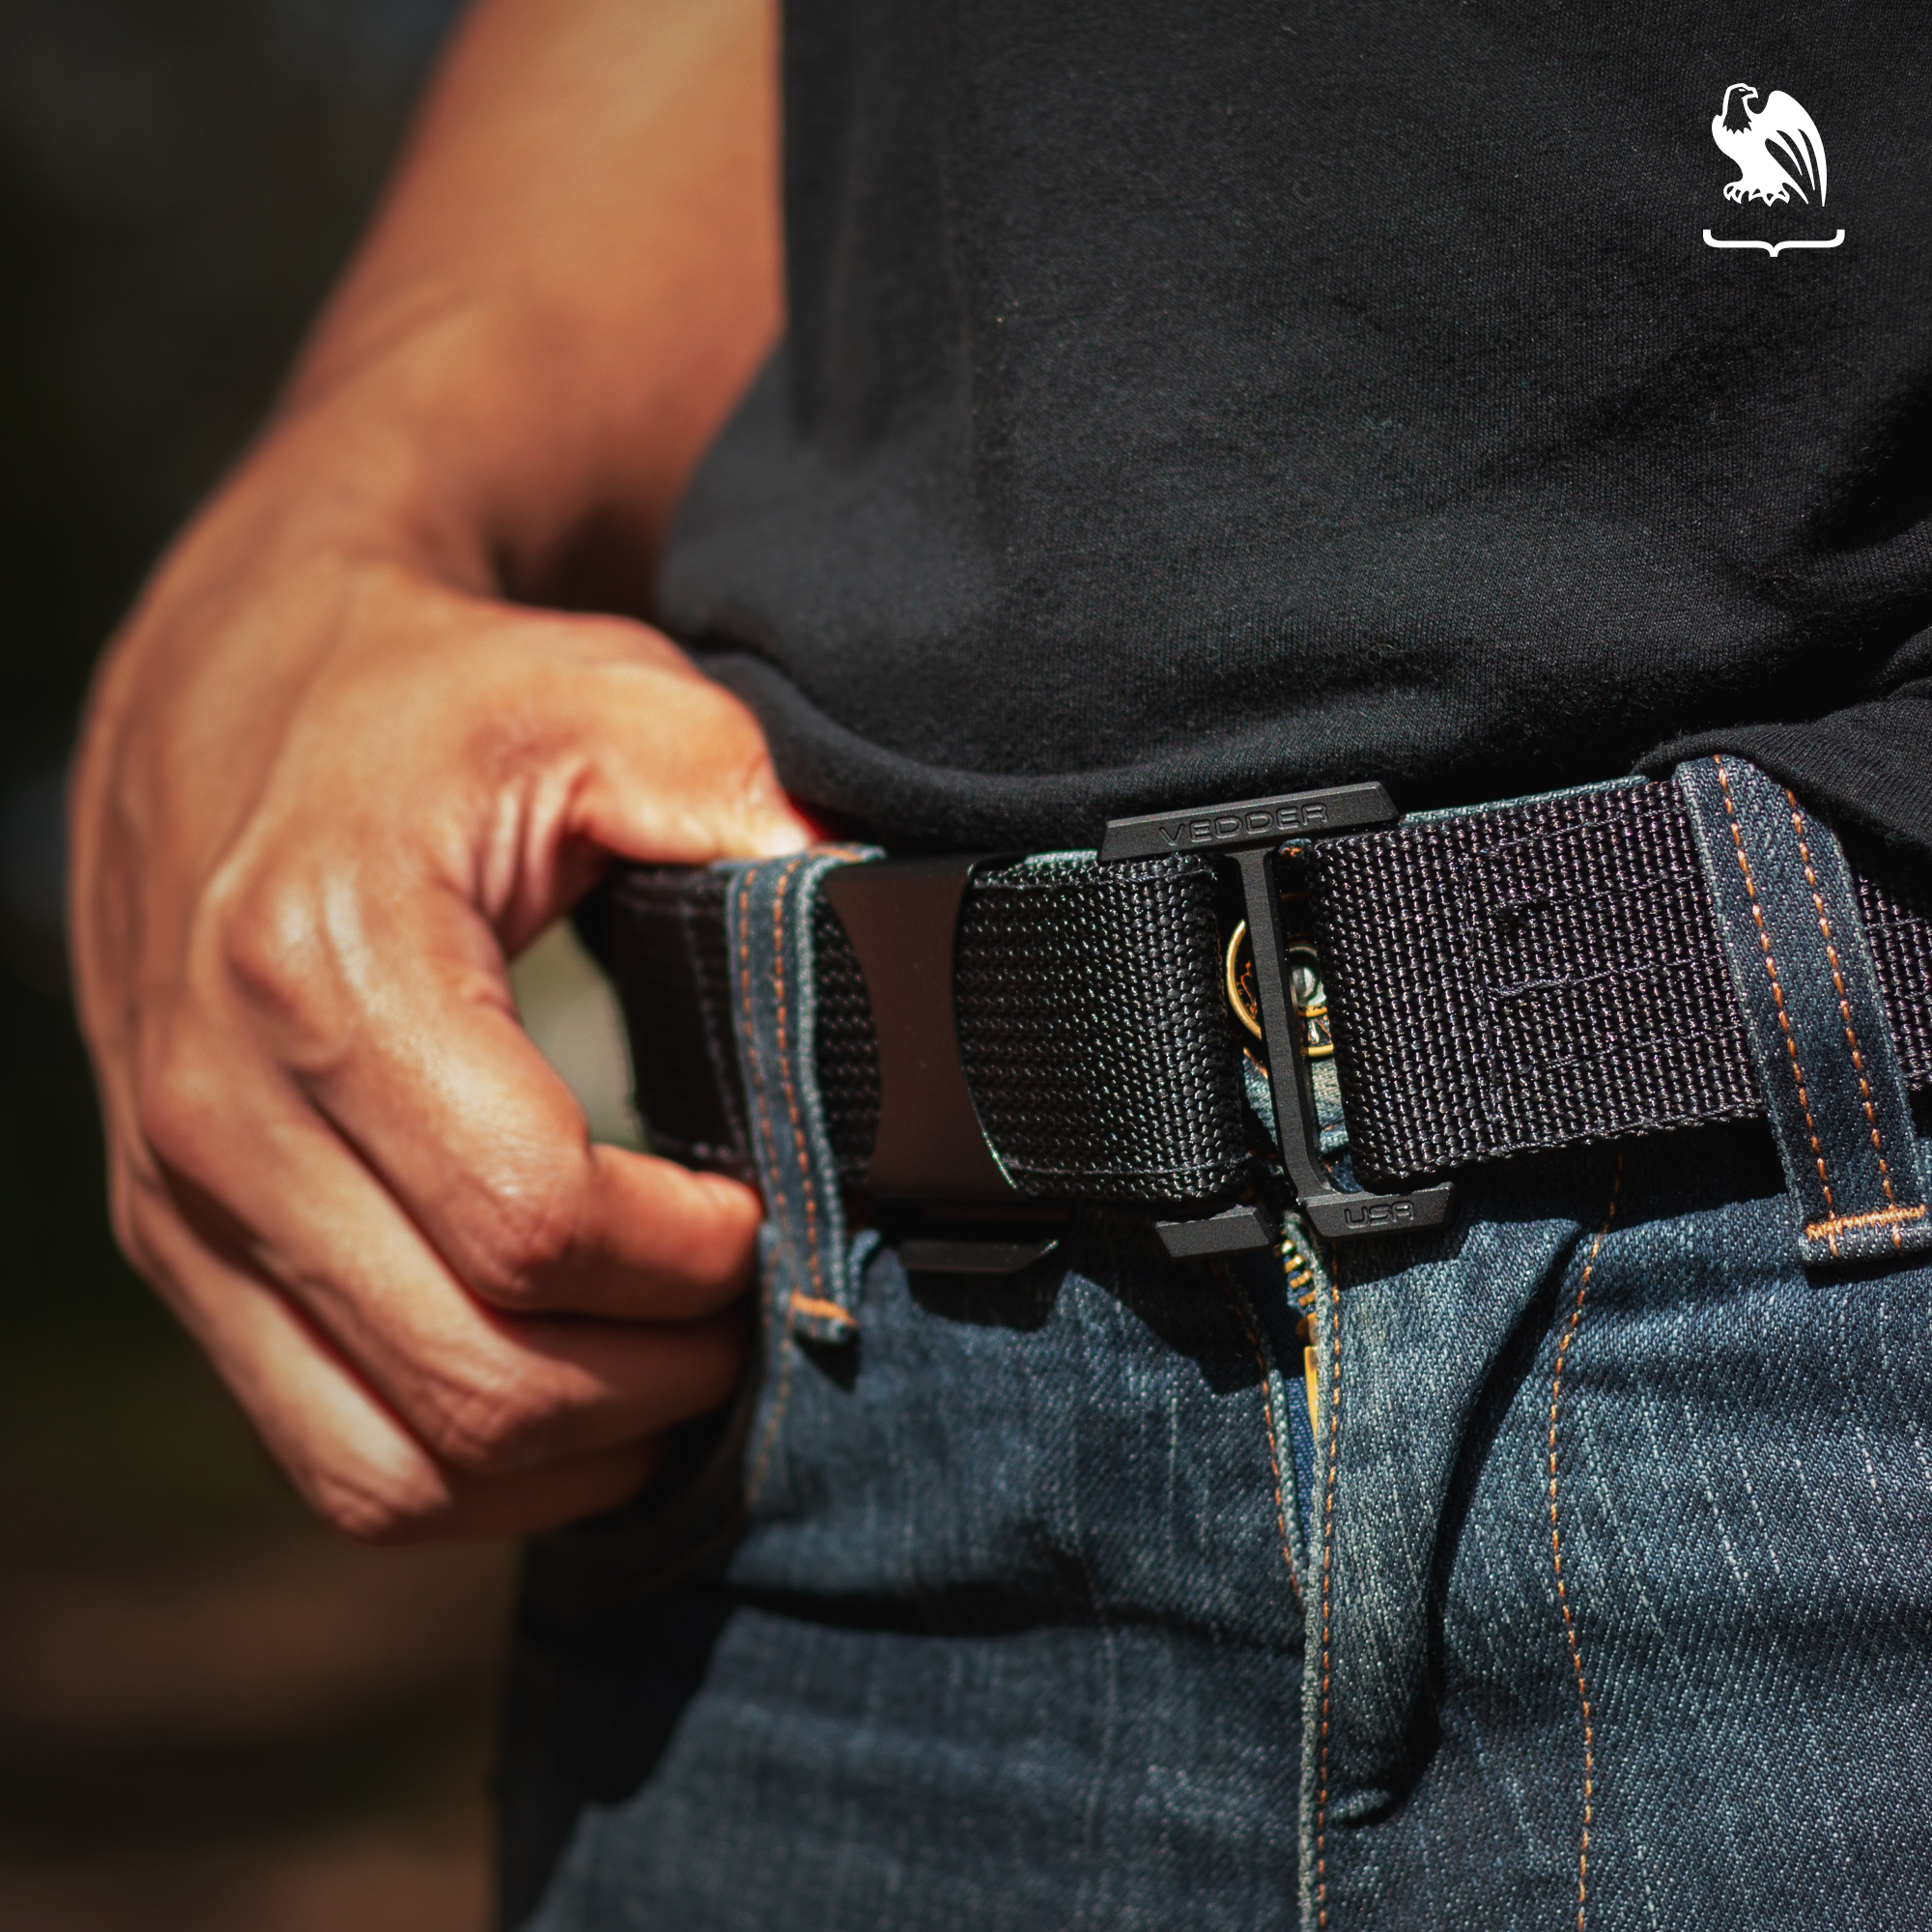 Comfortable edc belt - Comfortable gun belt